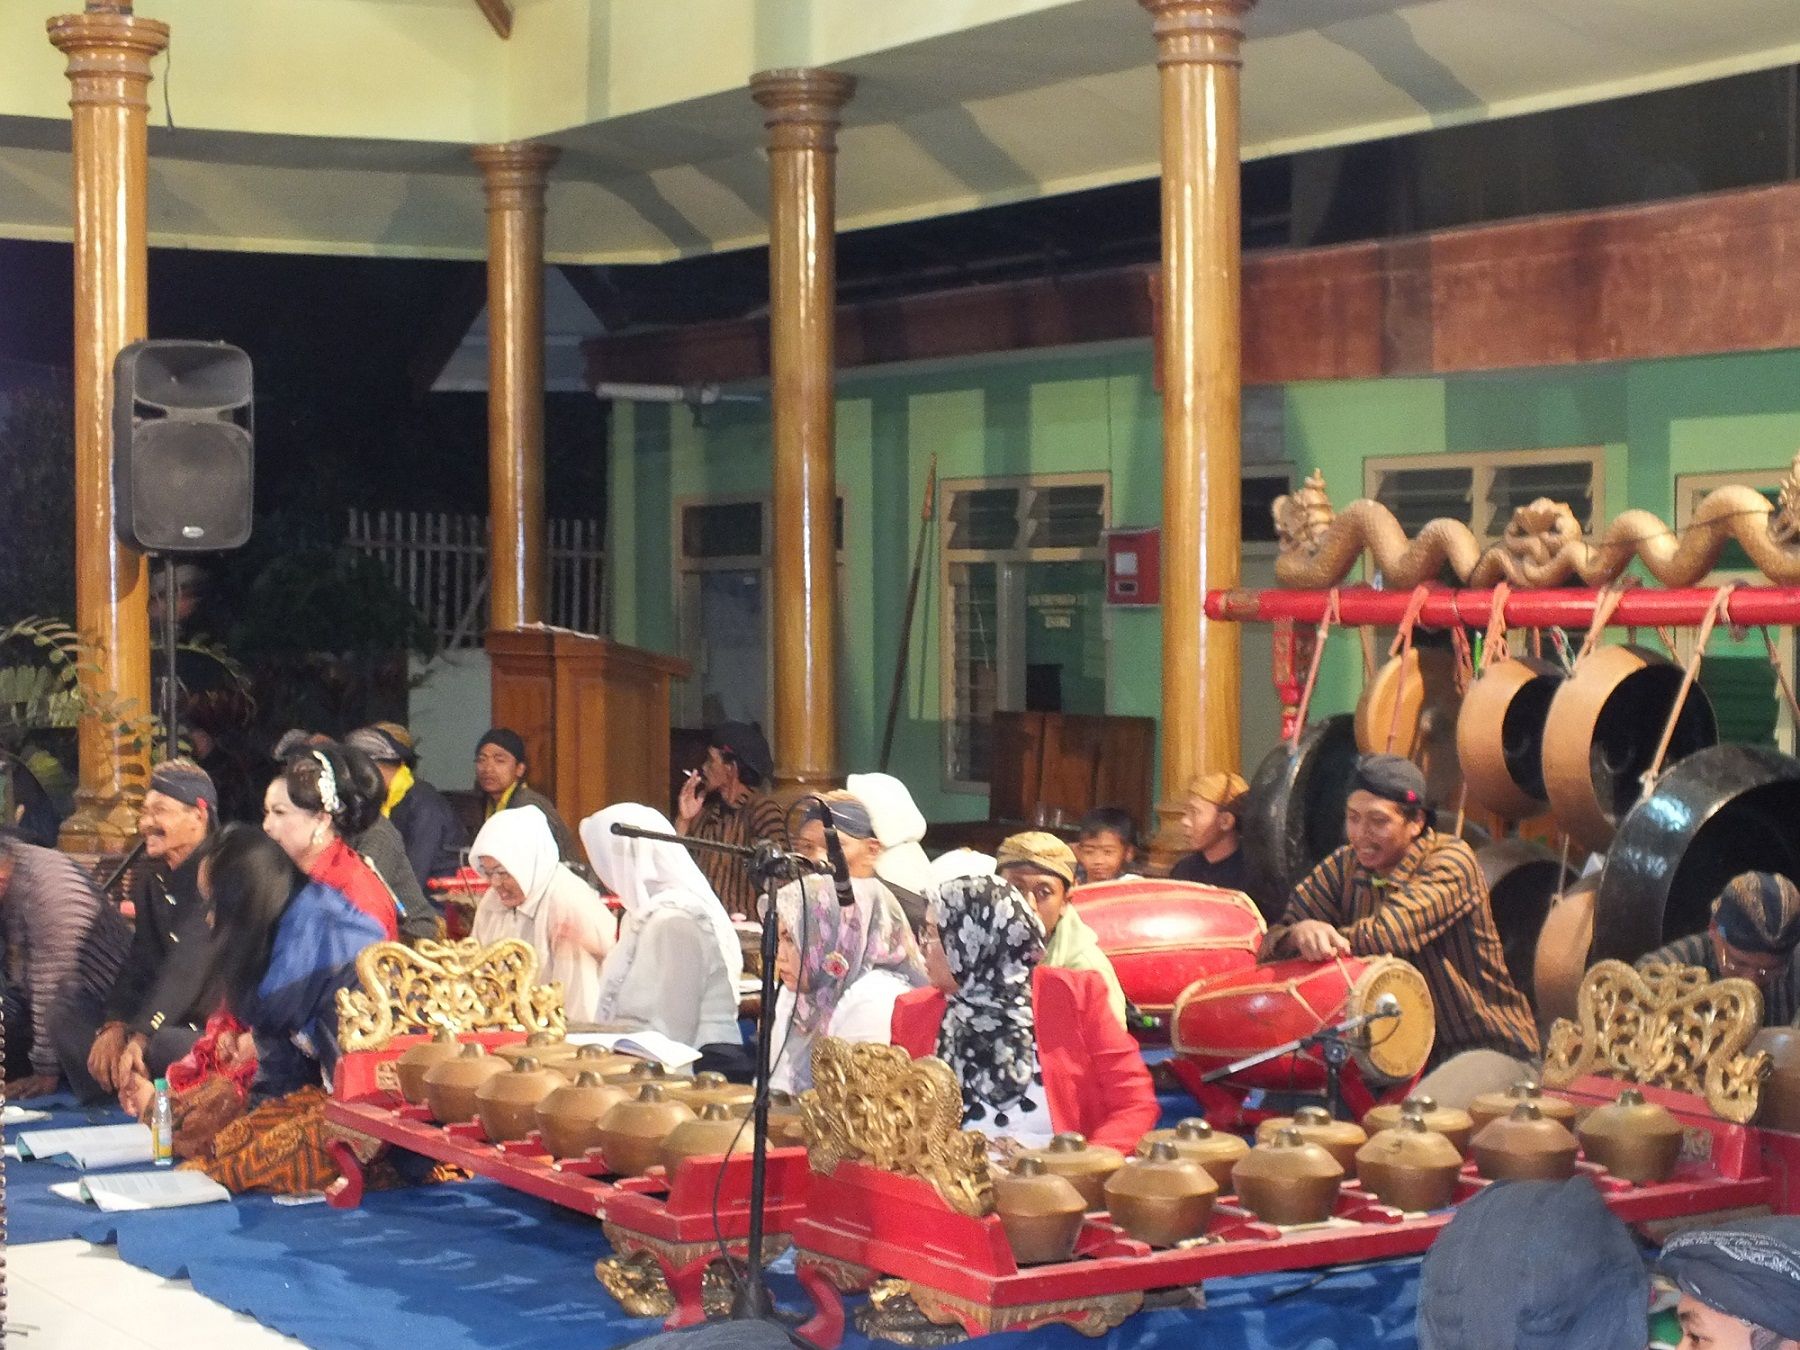 Wisata Sambil Belajar, Yuk Kunjungi 5 Desa Budaya di Jawa Timur Ini